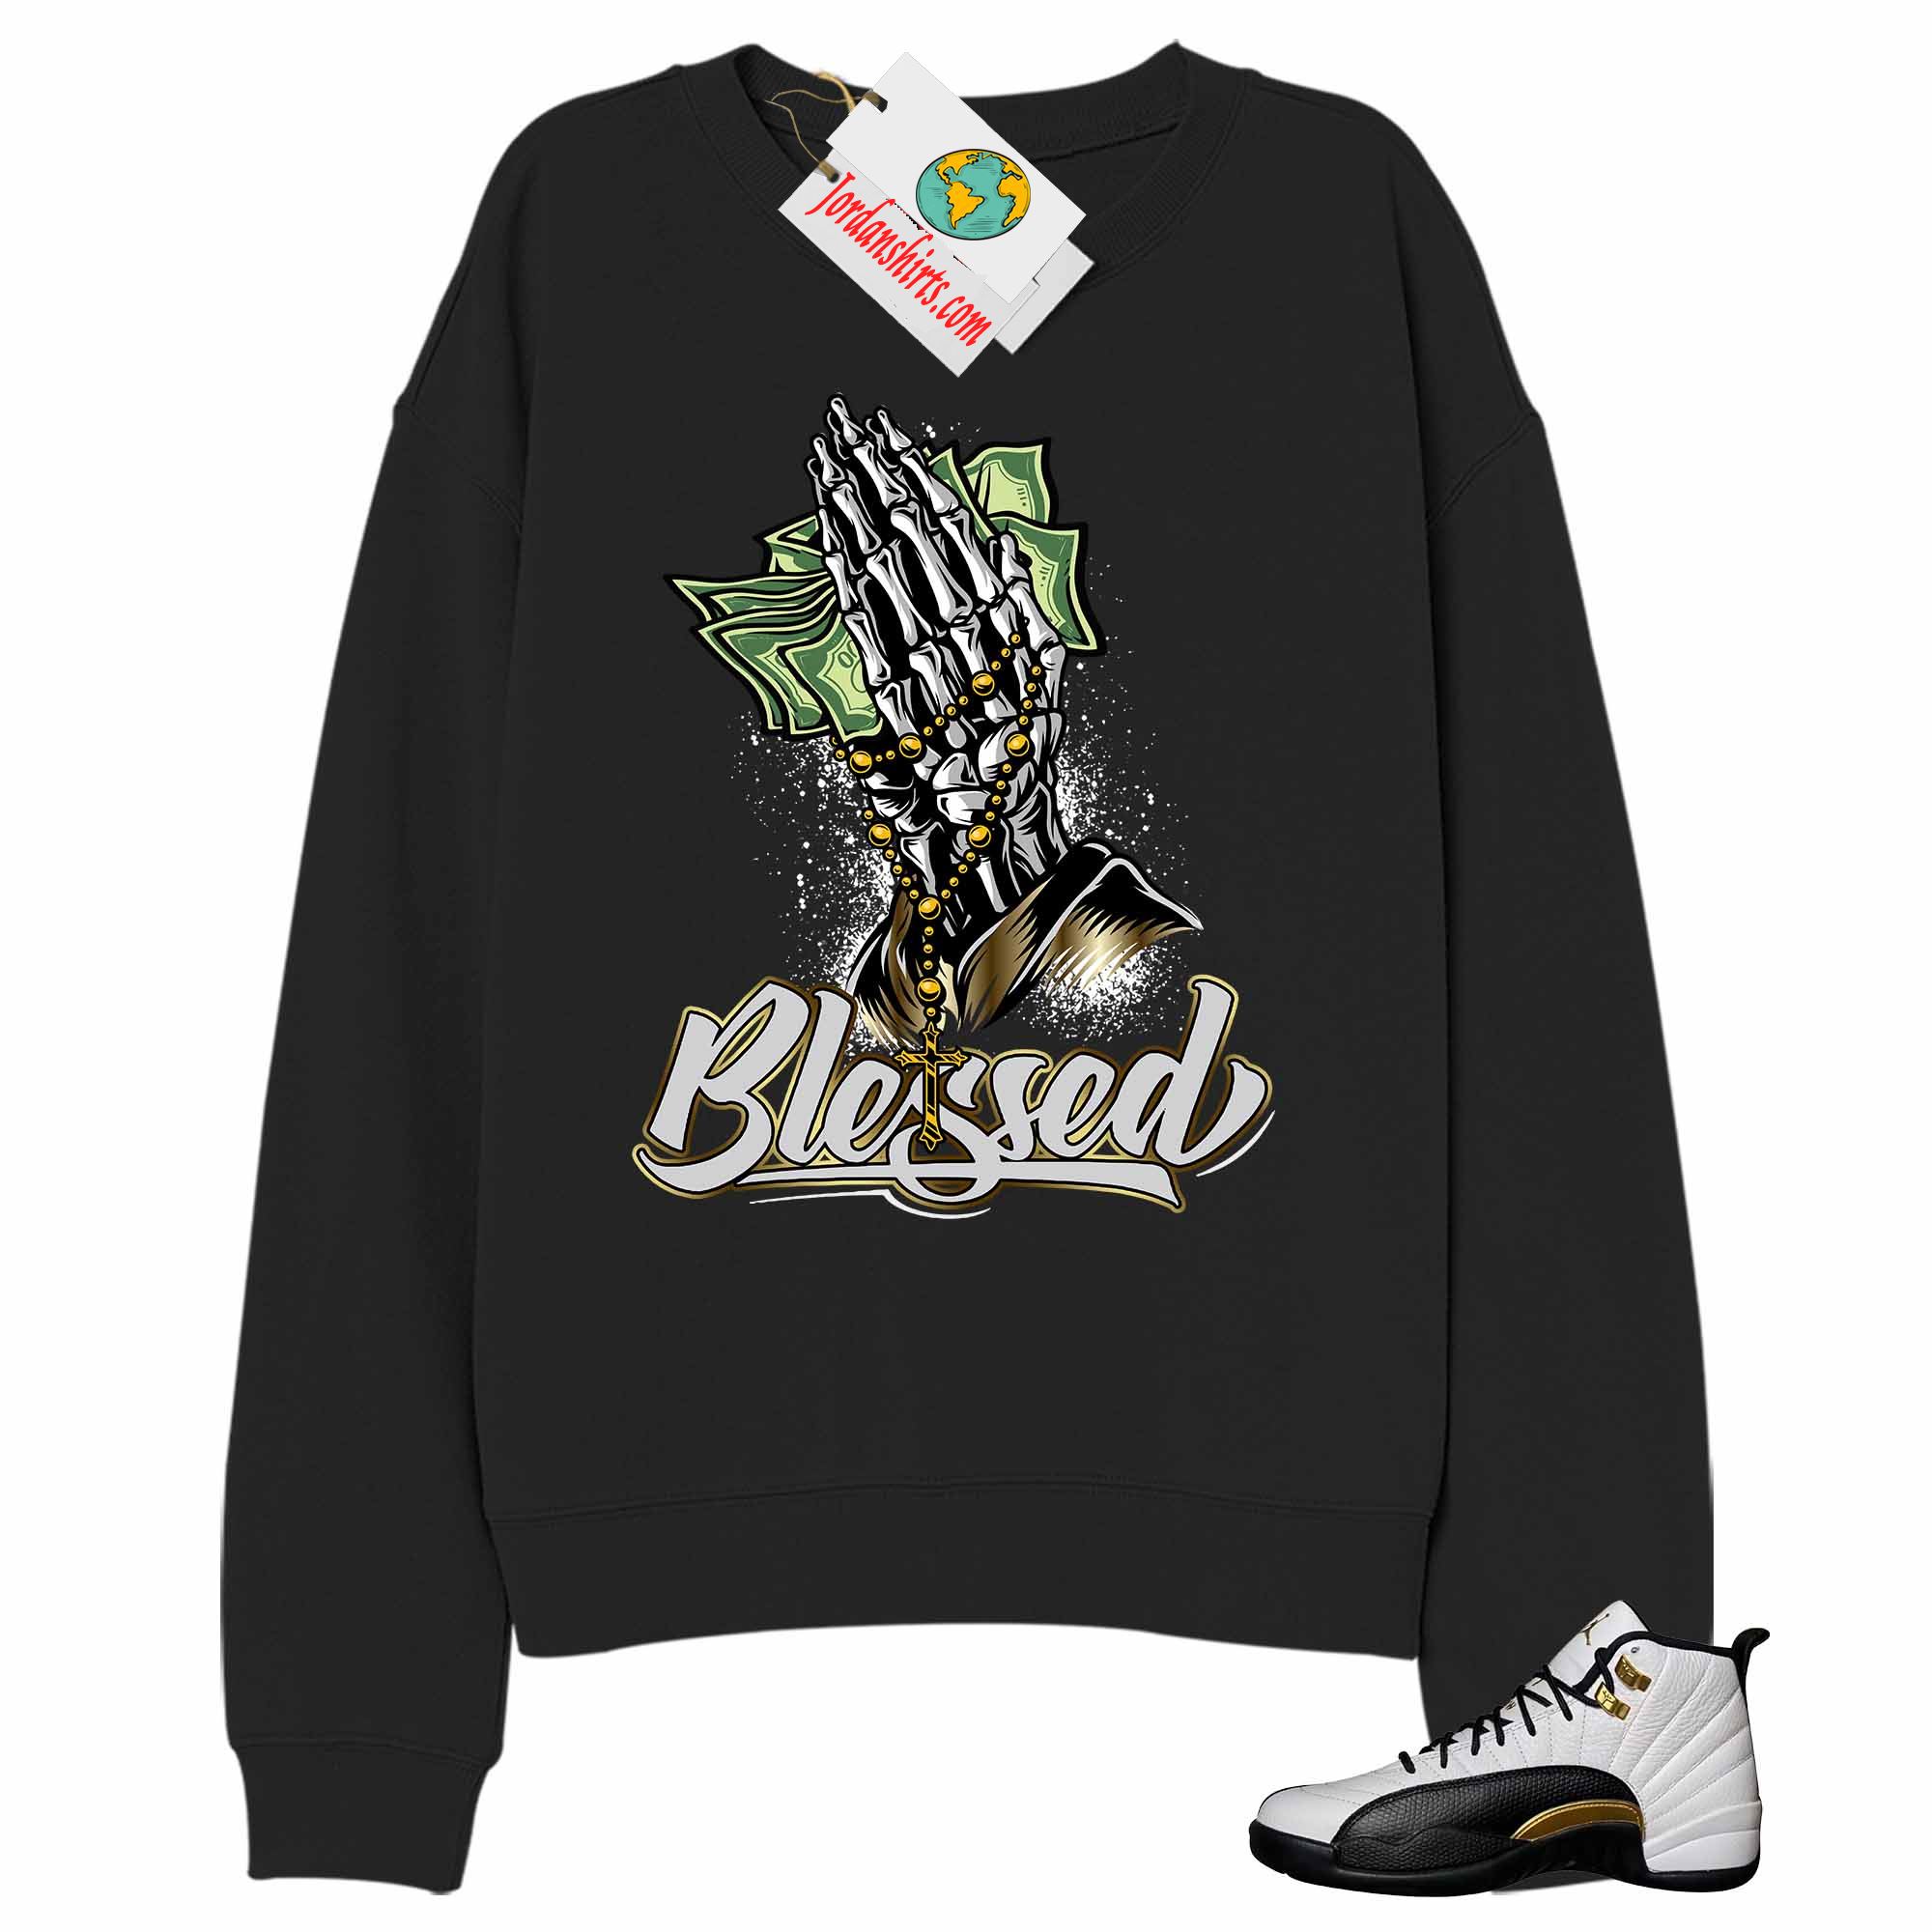 Jordan 12 Sweatshirt, Blessed Pray Hand Money Black Sweatshirt Air Jordan 12 Royalty 12s Plus Size Up To 5xl